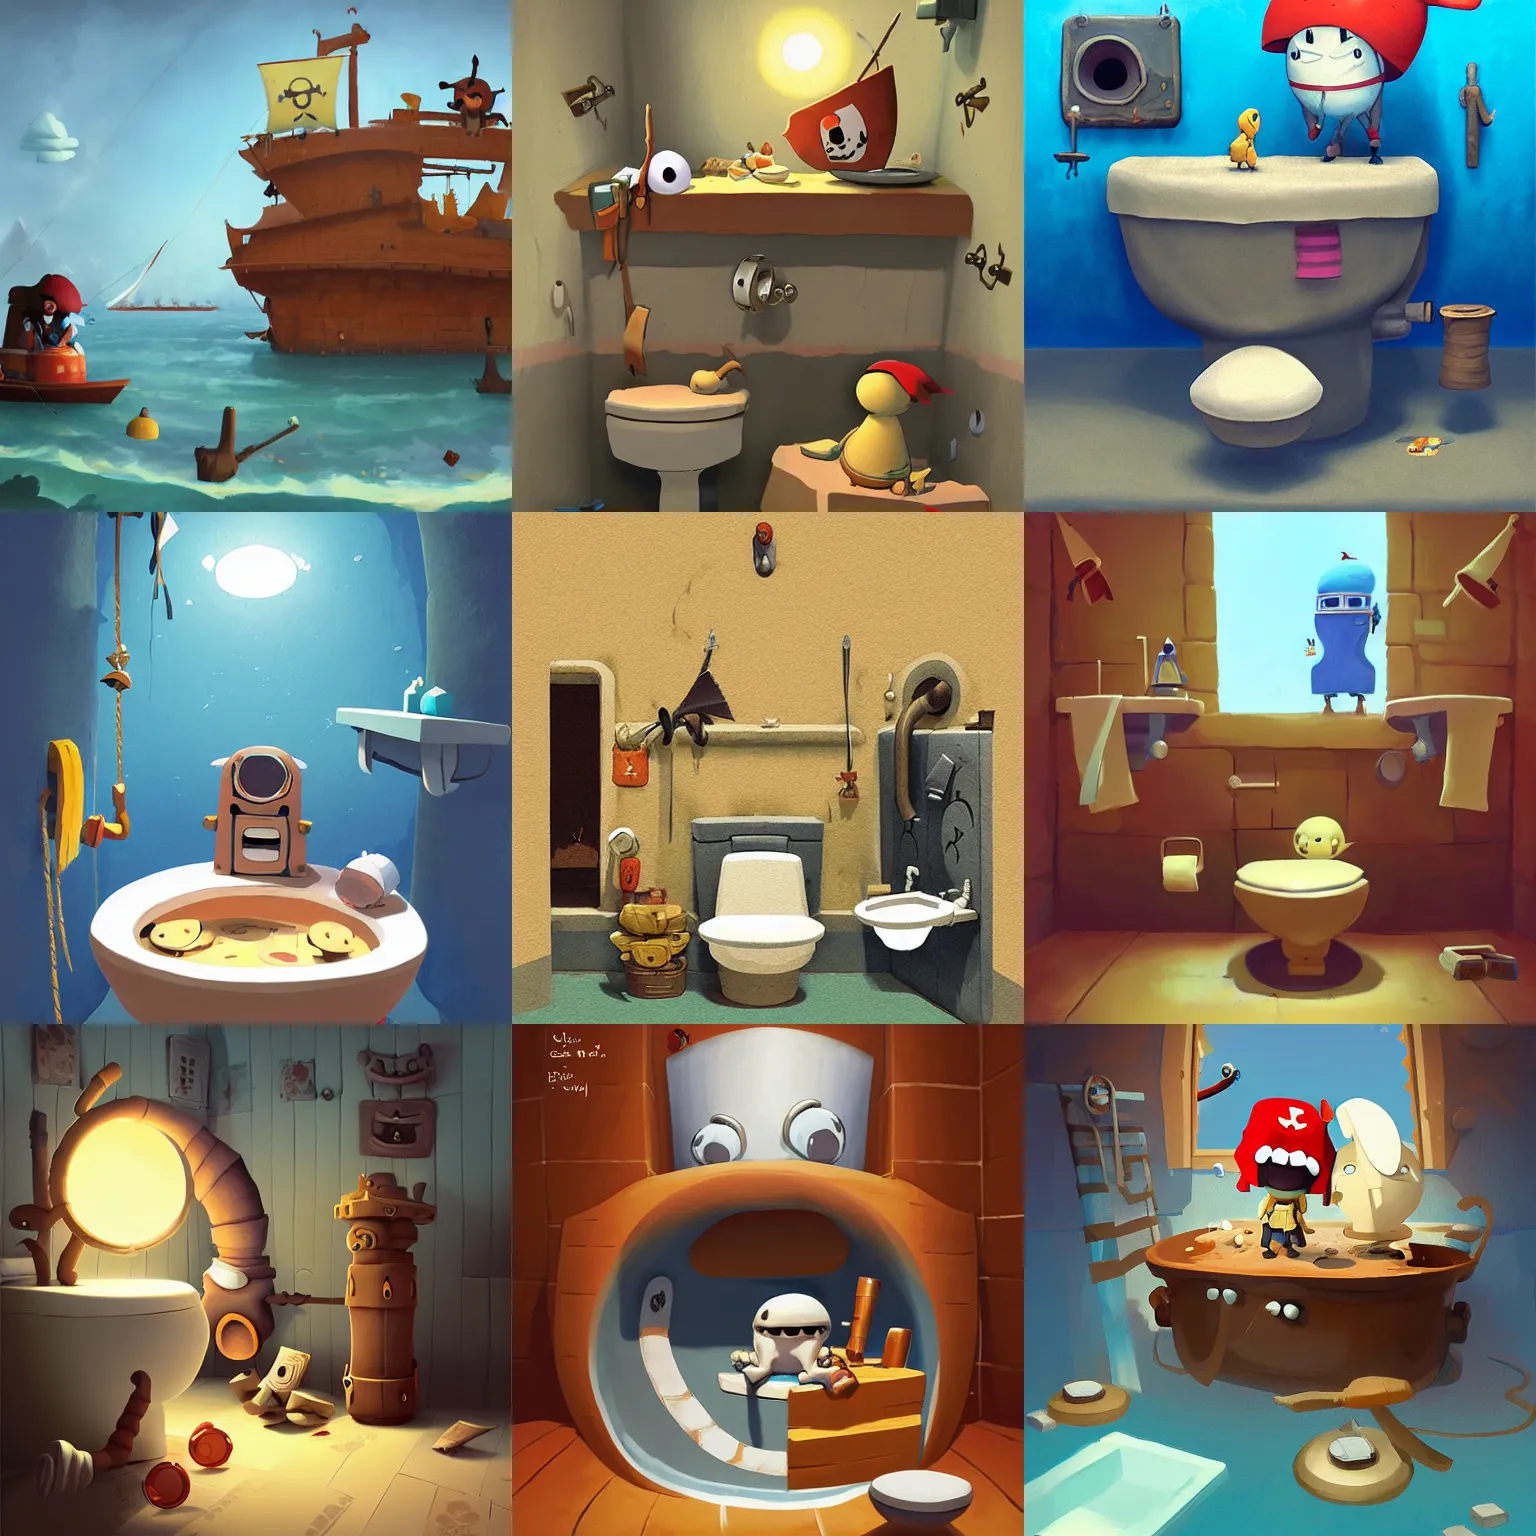 Toilet Treasures: WC Simulator - Apps on Google Play